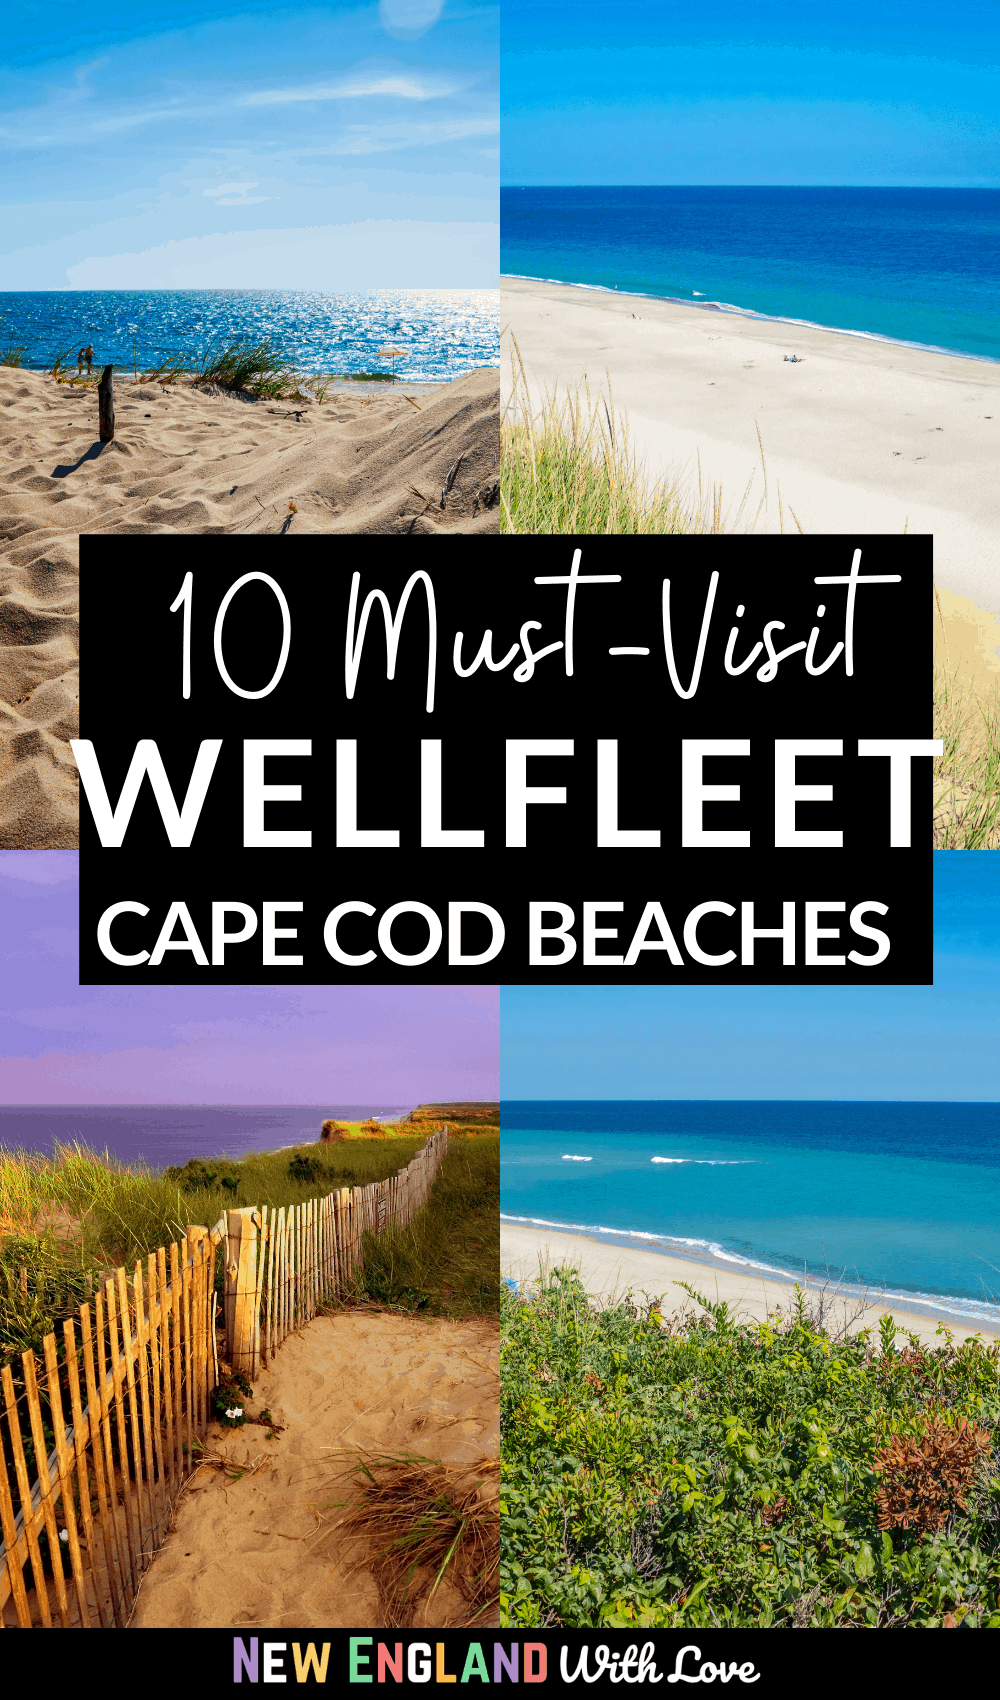 Pinterest graphic reading "10 Must-Visit WELLFLEET CAPE COD BEACHES"